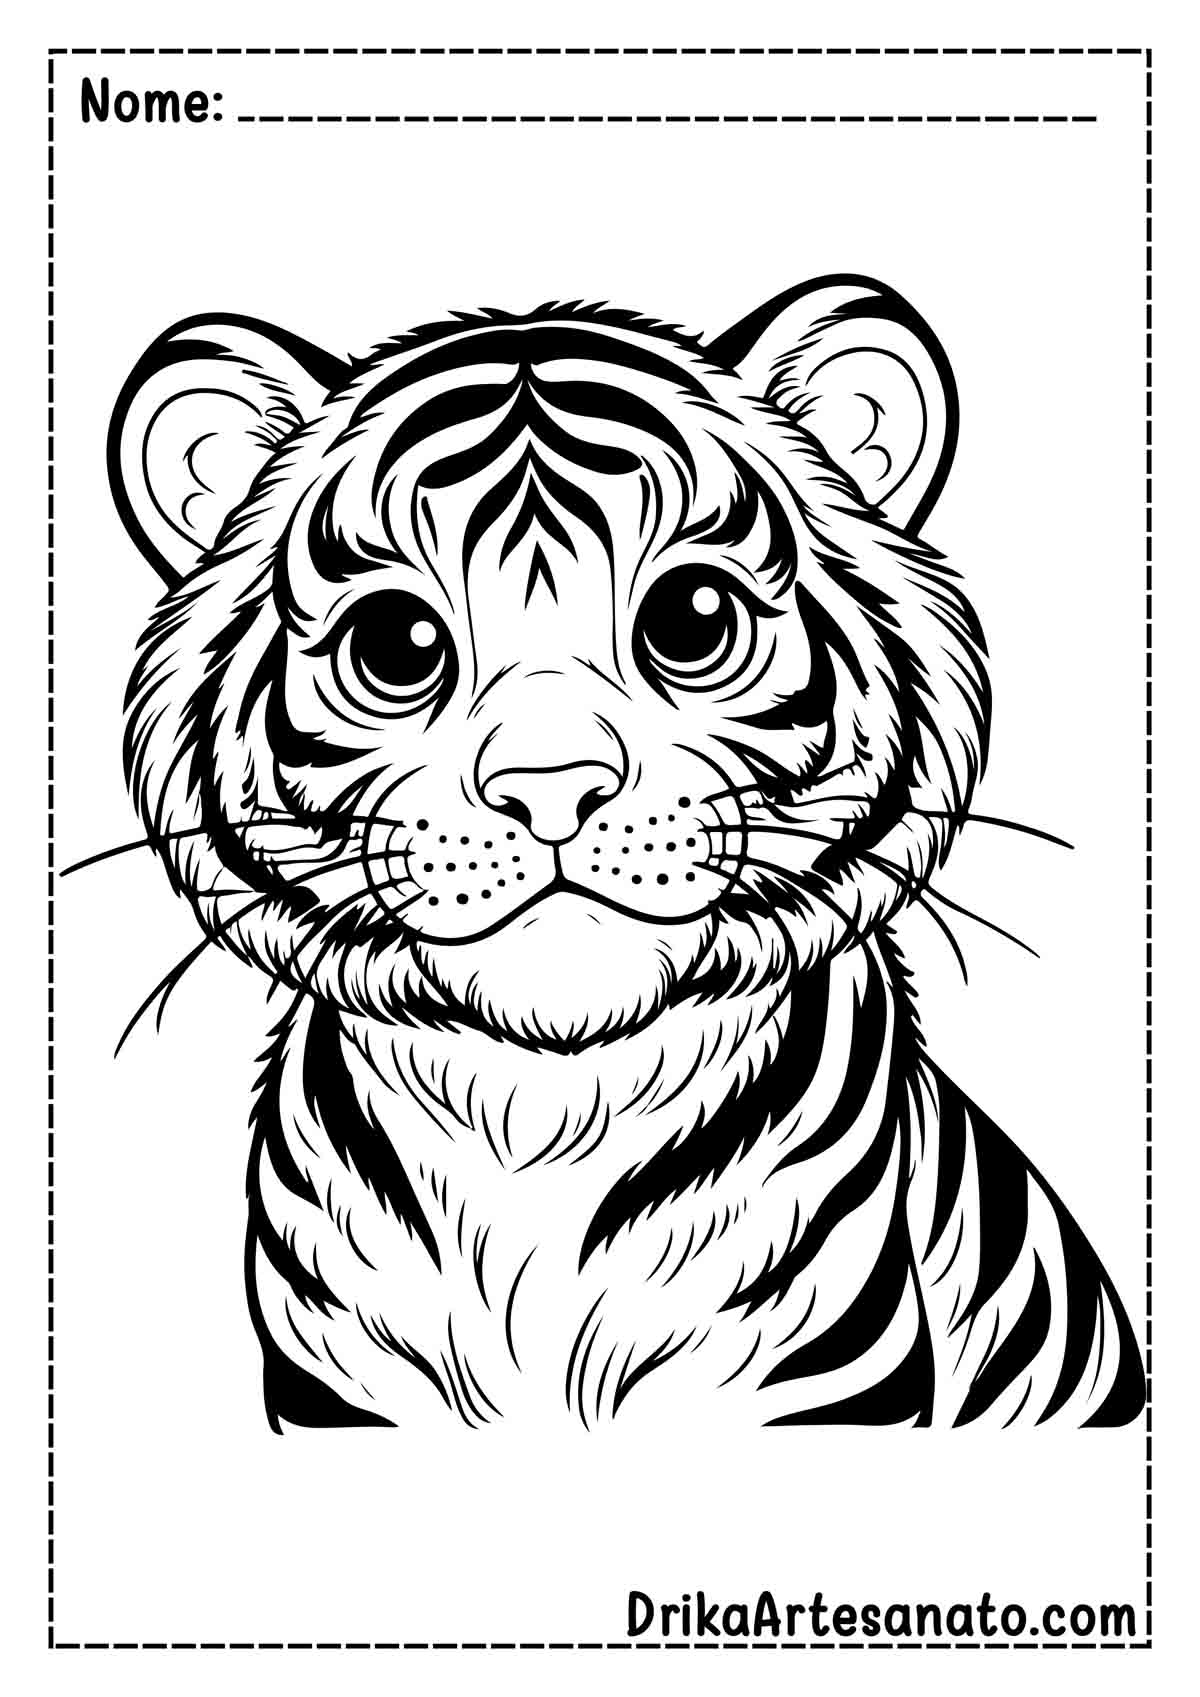 Desenho de Tigre Fácil para Colorir